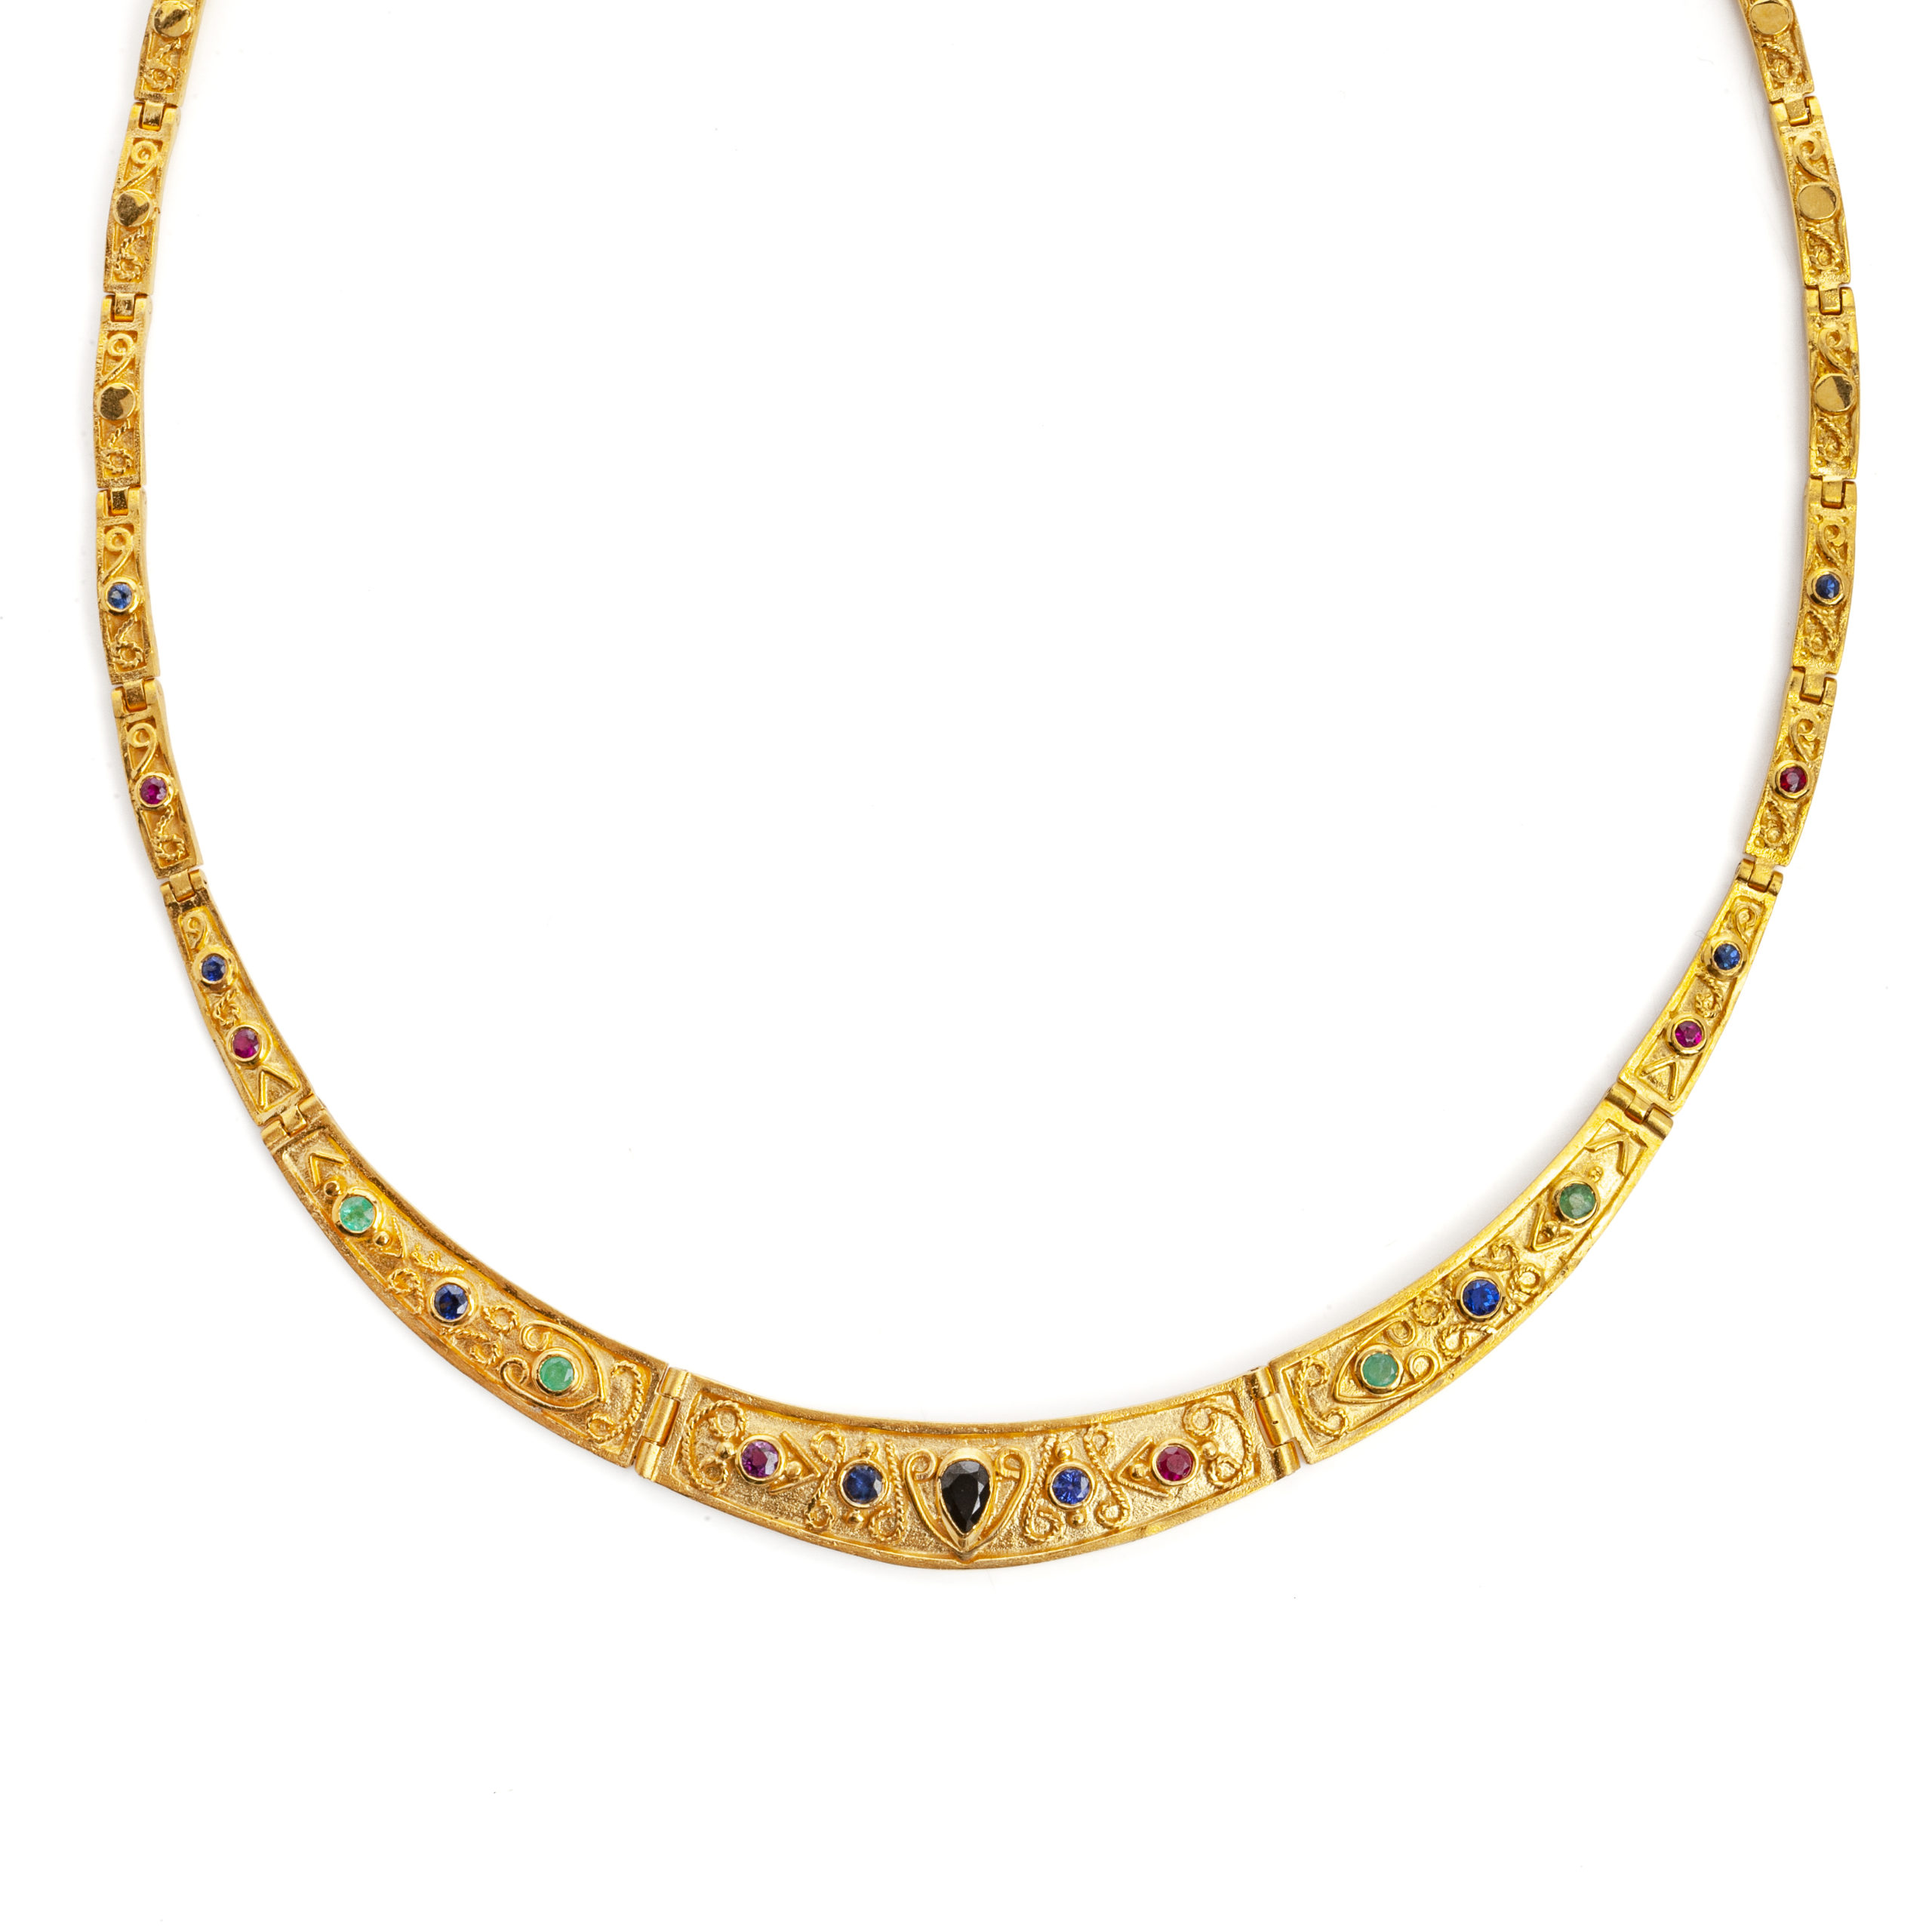 Byzantine Gold Necklace with Precious Stones